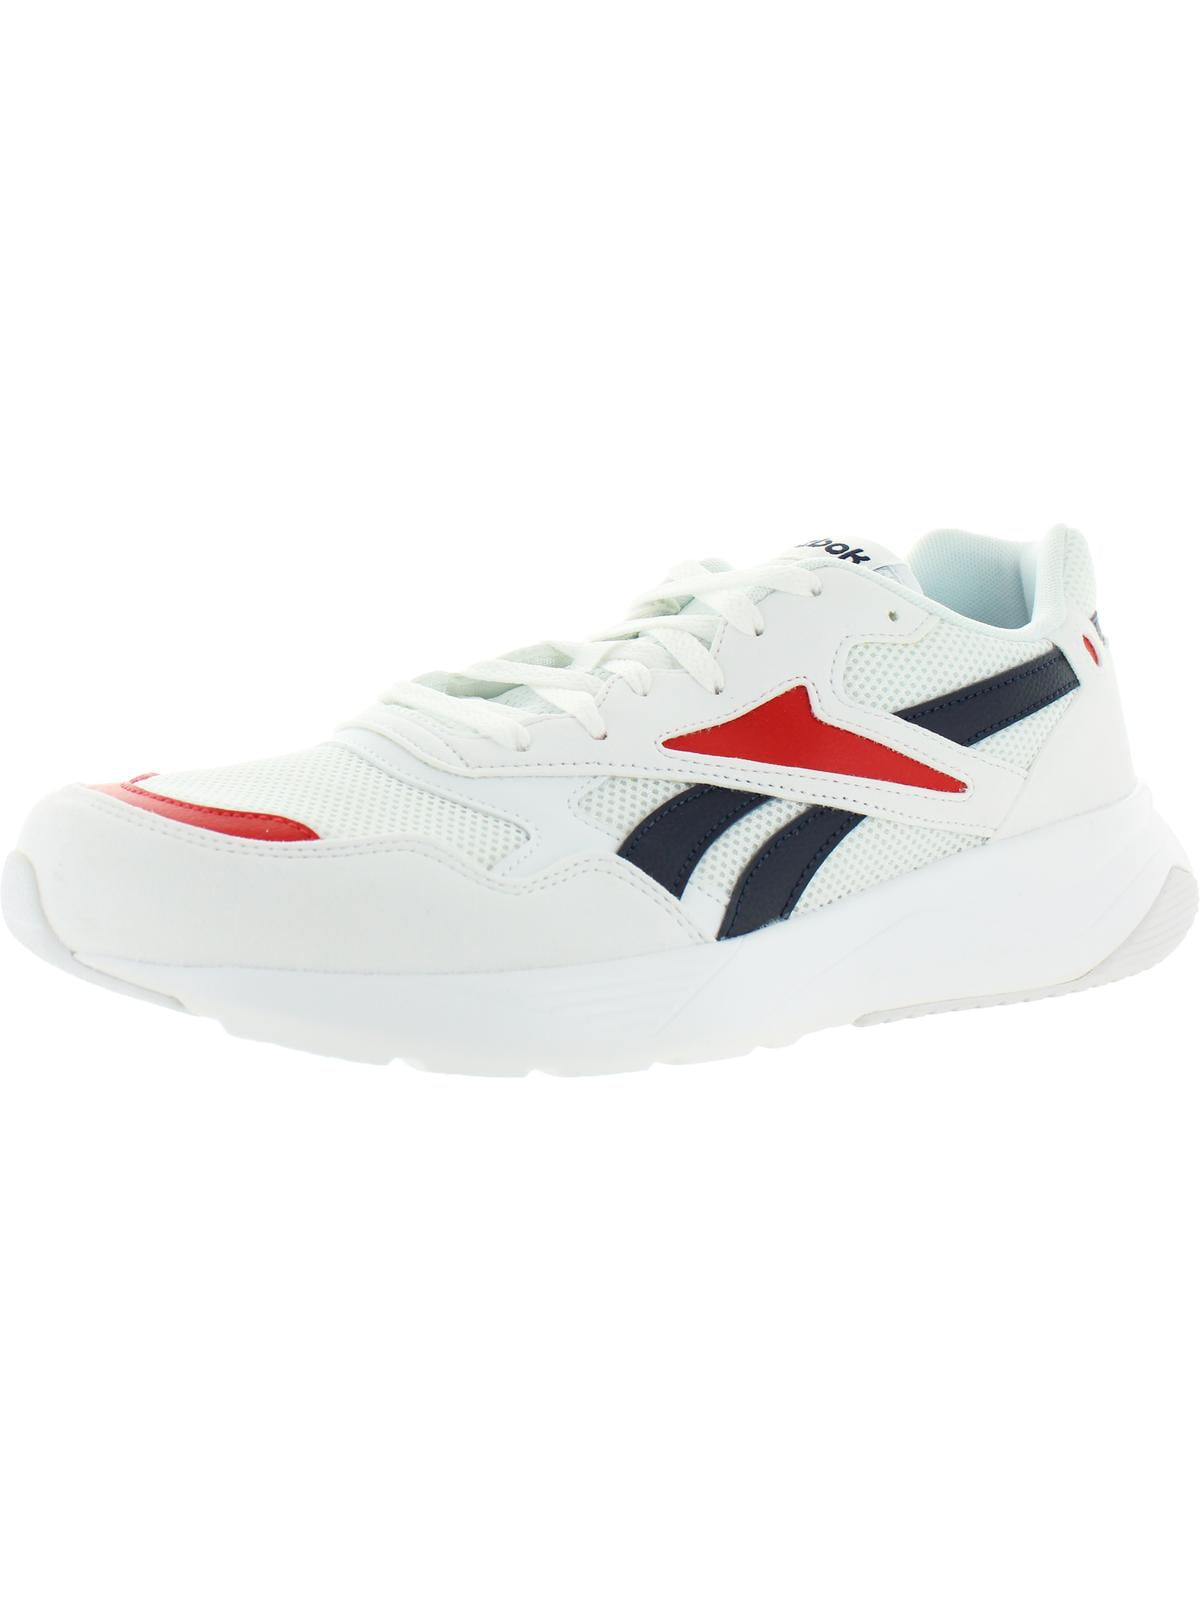 Reebok Royal Dashonic DV3760 Mens White Mesh Athletic Lace Up Running Shoes 